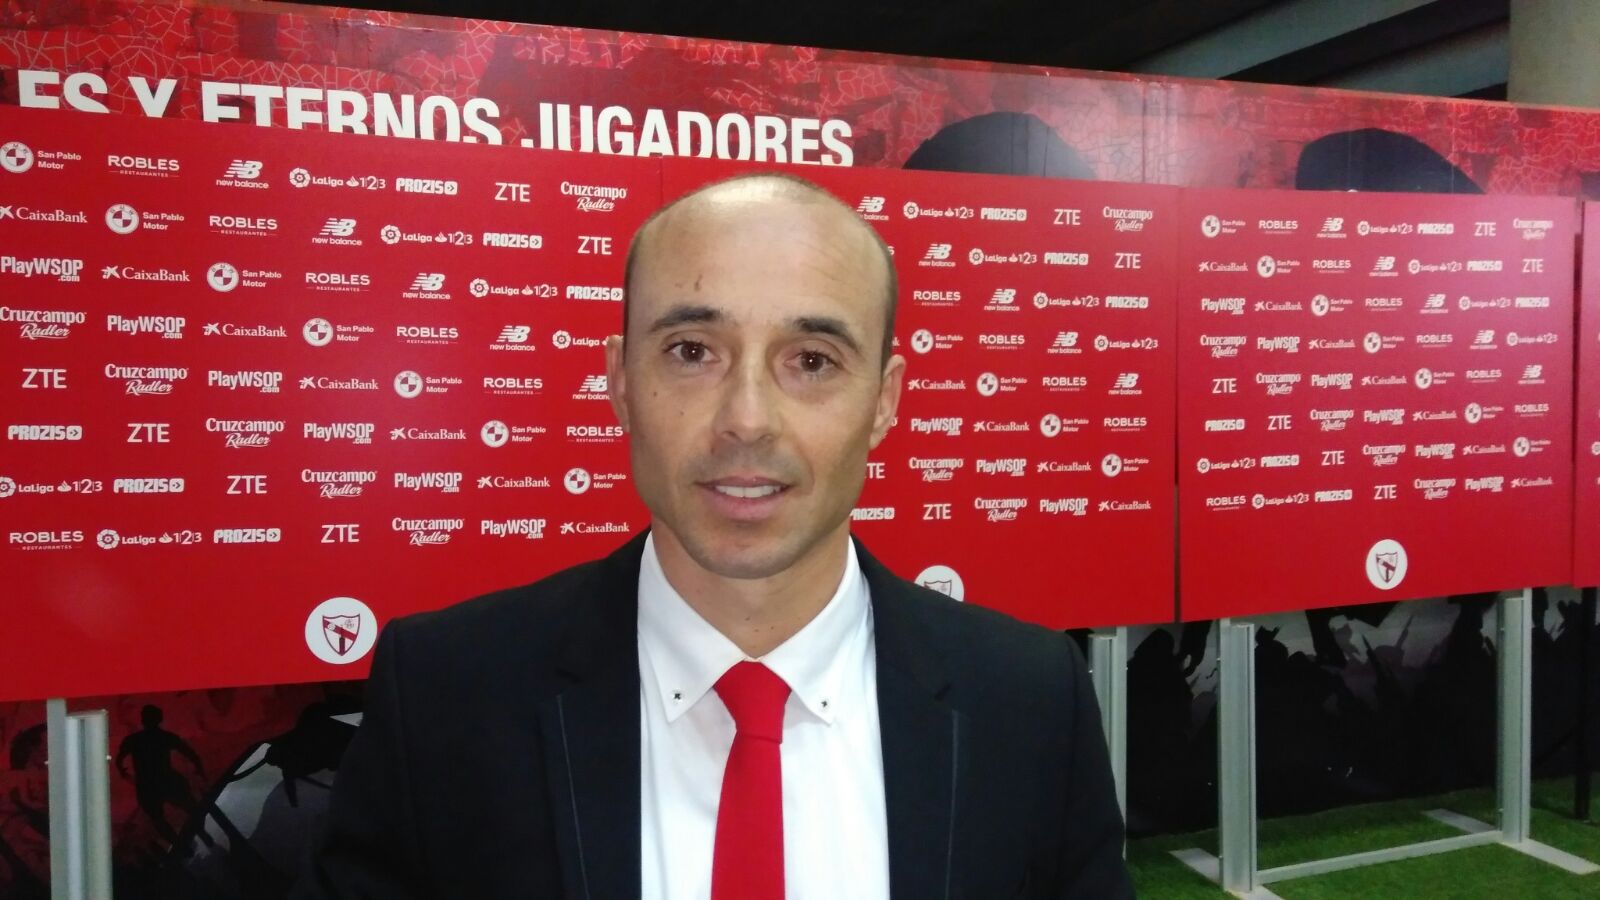 Dimas Carrasco entrenador del Sevilla FC Juvenil